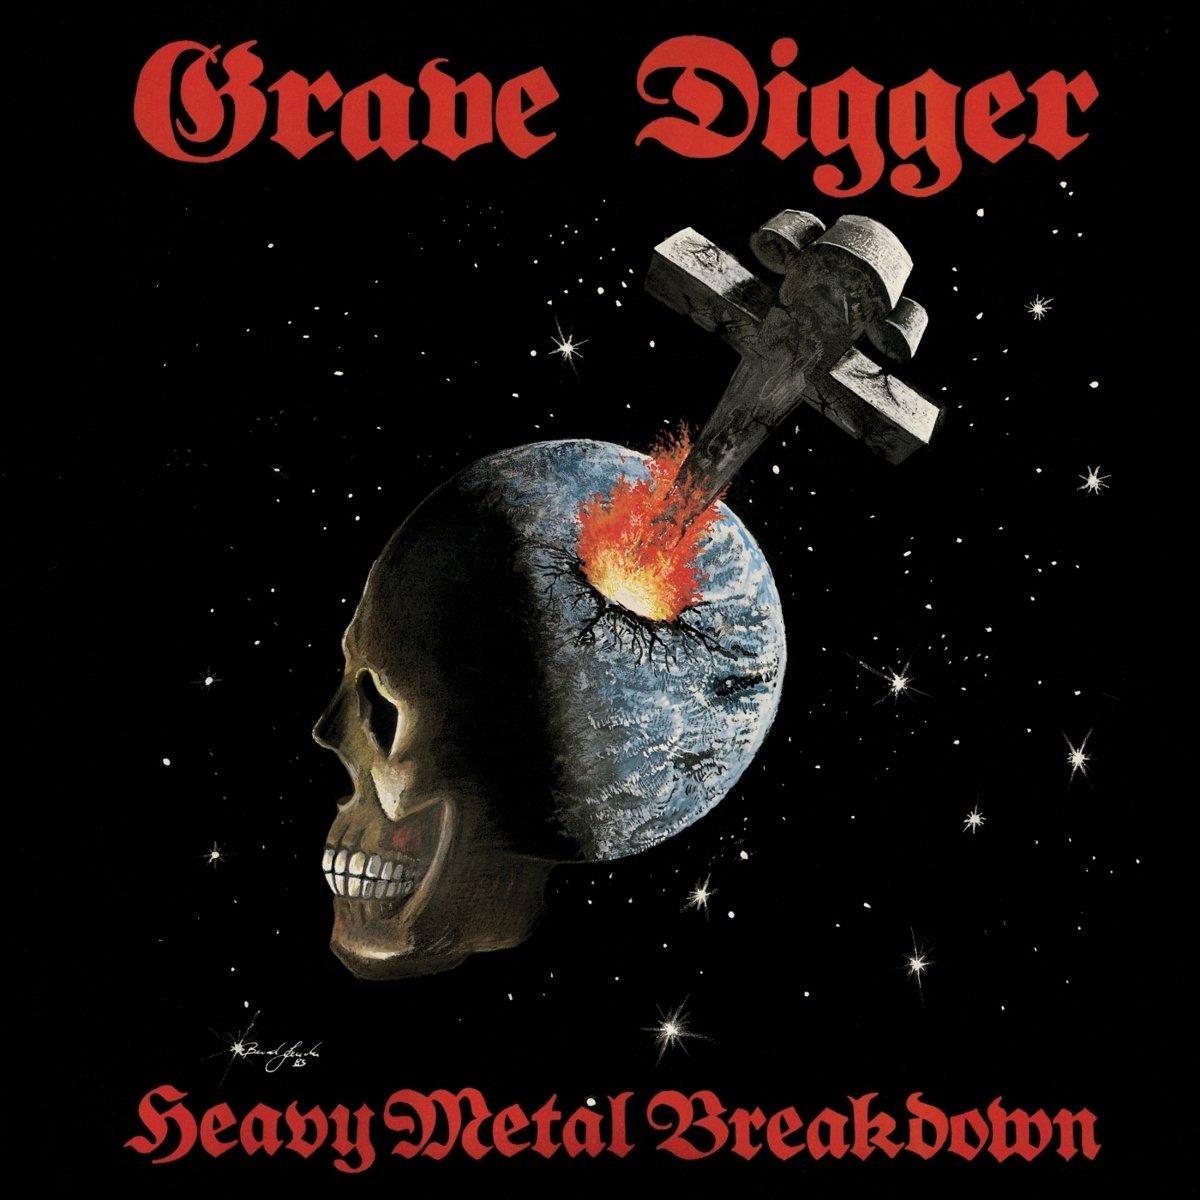 Grave Digger "Heavy Metal Breakdown" 2x12" Red Vinyl